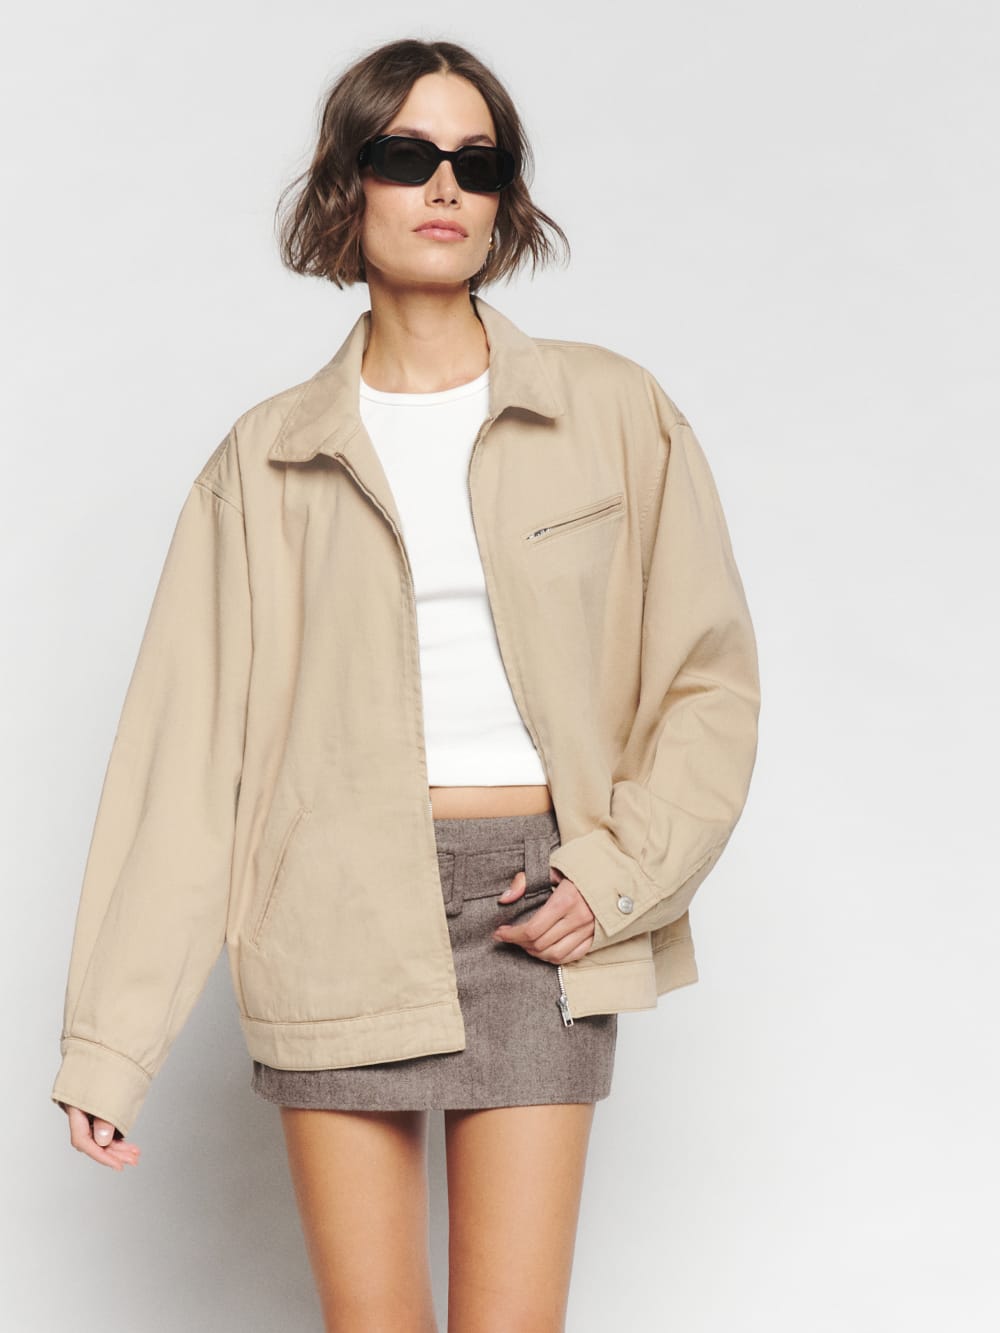 Reformation beige marco bomber jacket. Waist adjustable, chest pockets, welt pockets, and front zipper.